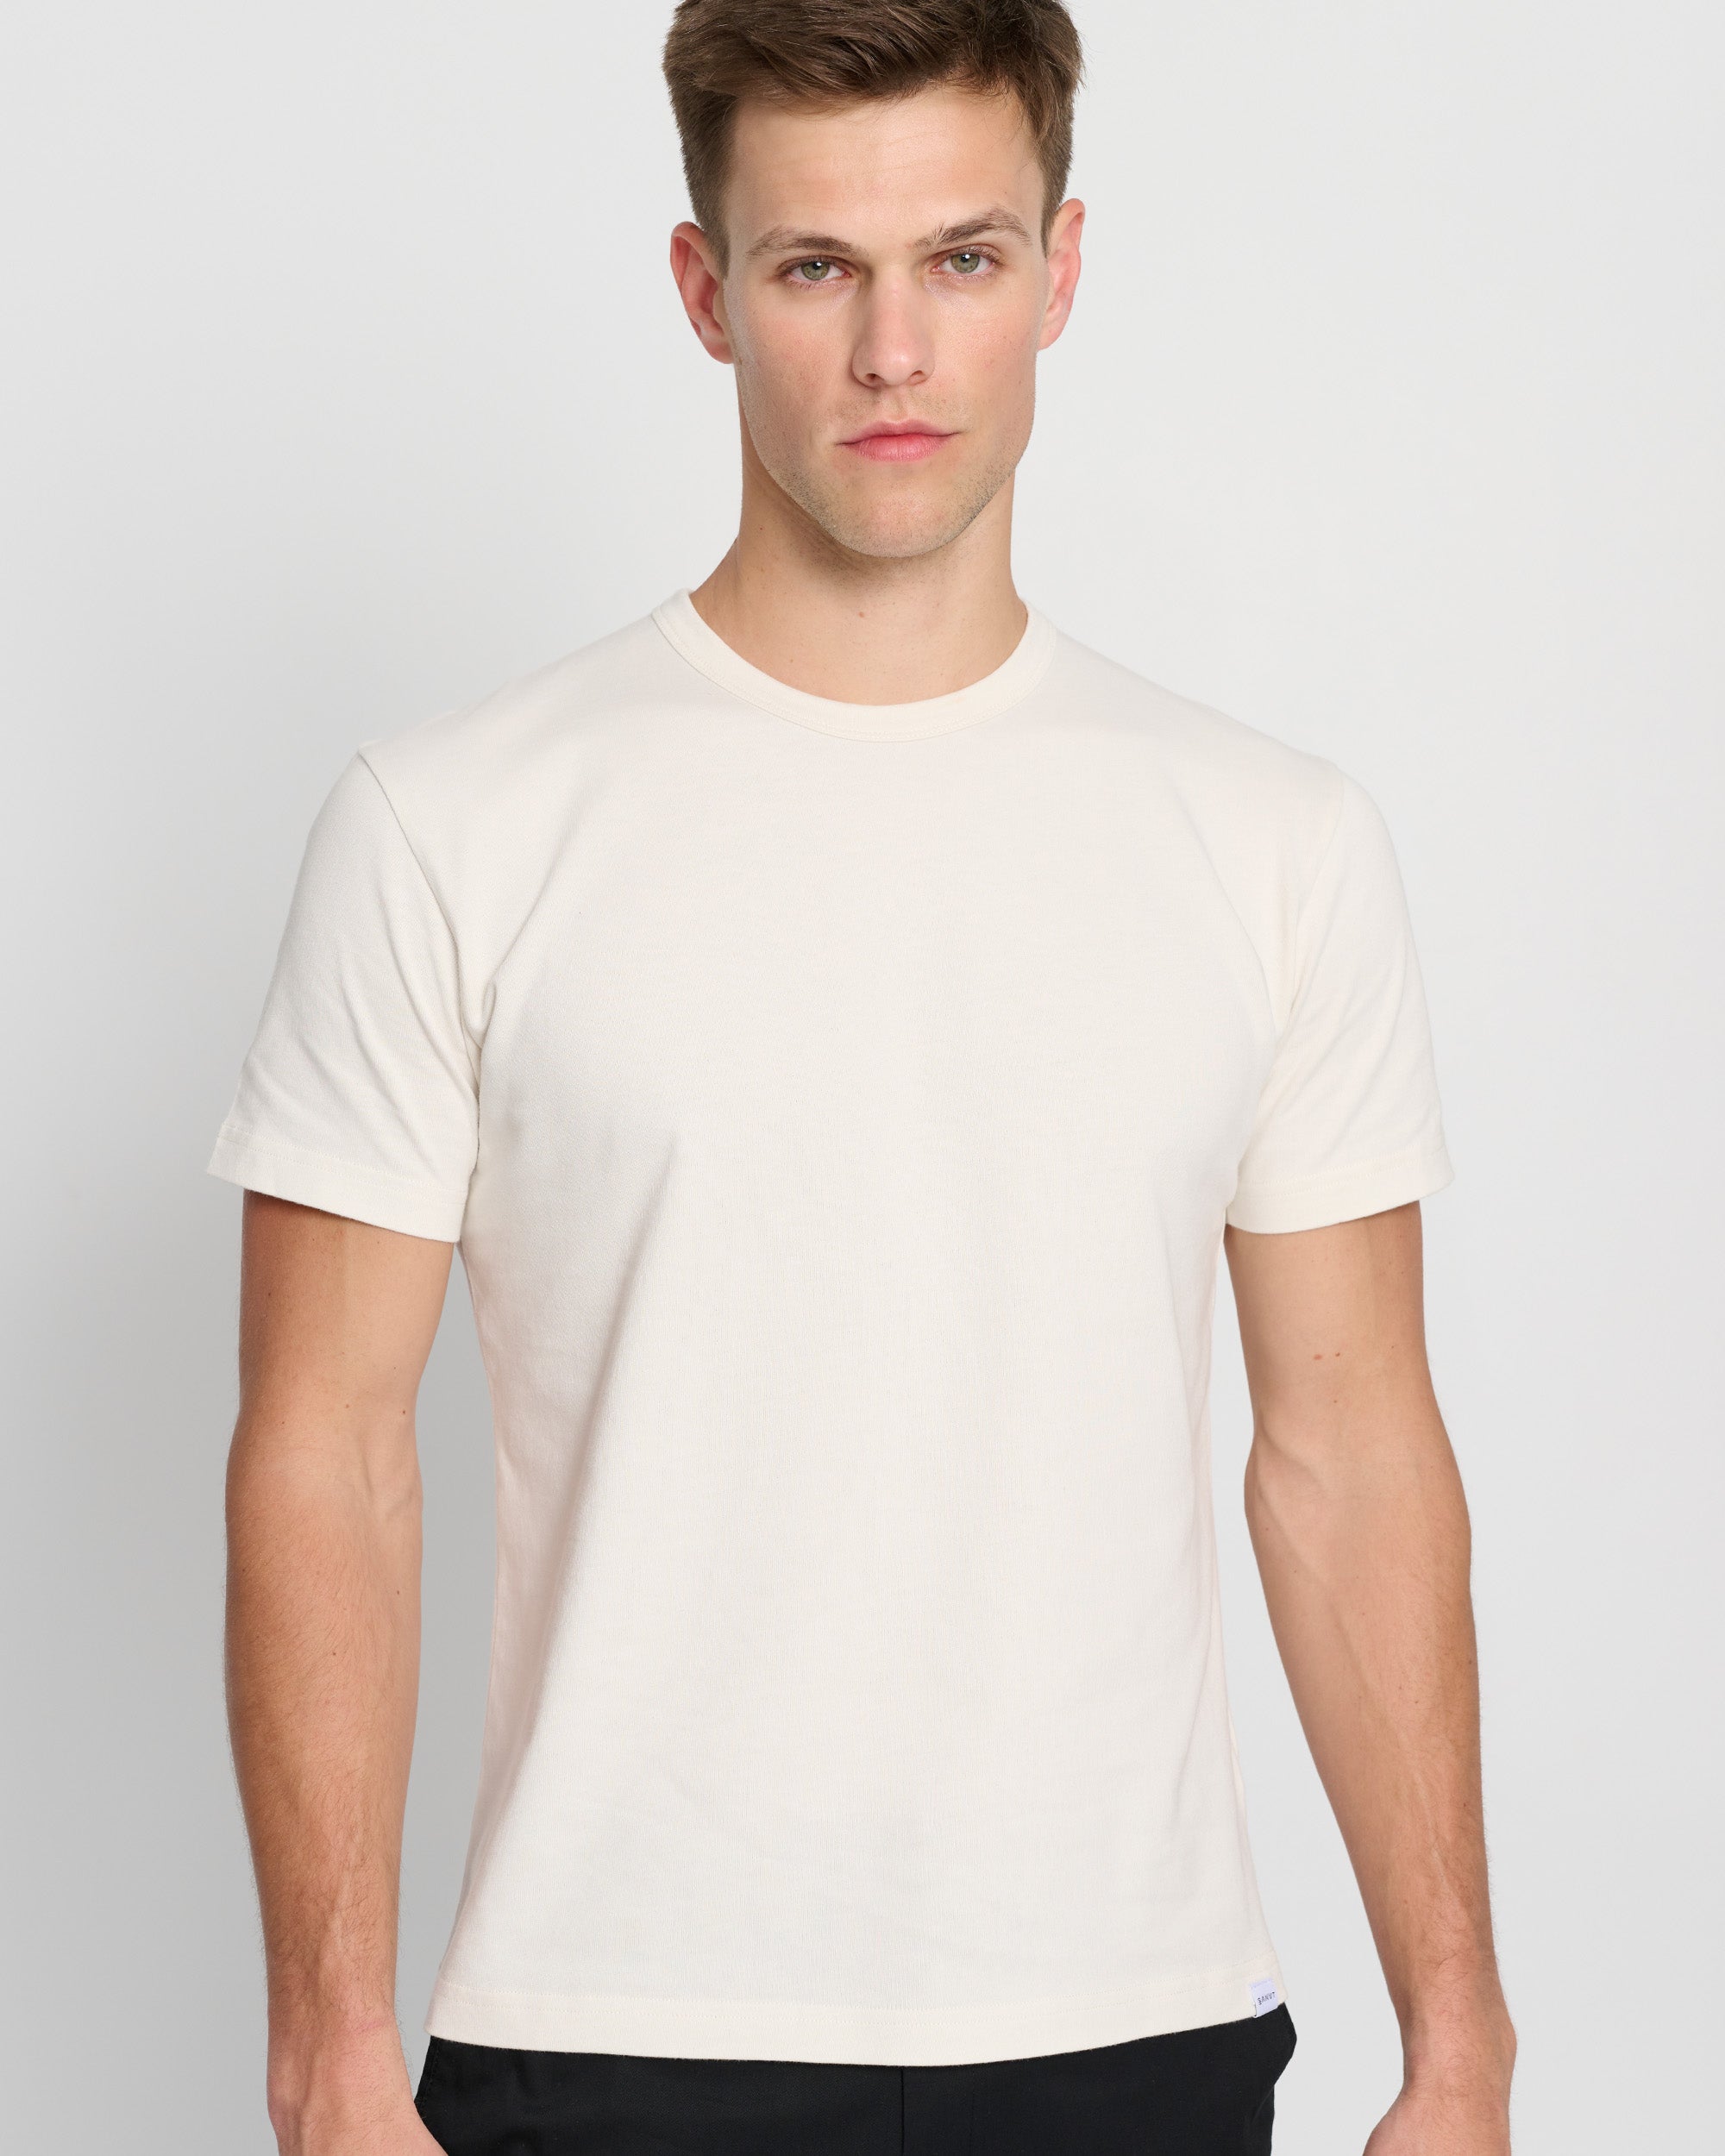 The Heavyweight T-Shirt for Men | High Quality Winter Cotton T-Shirt